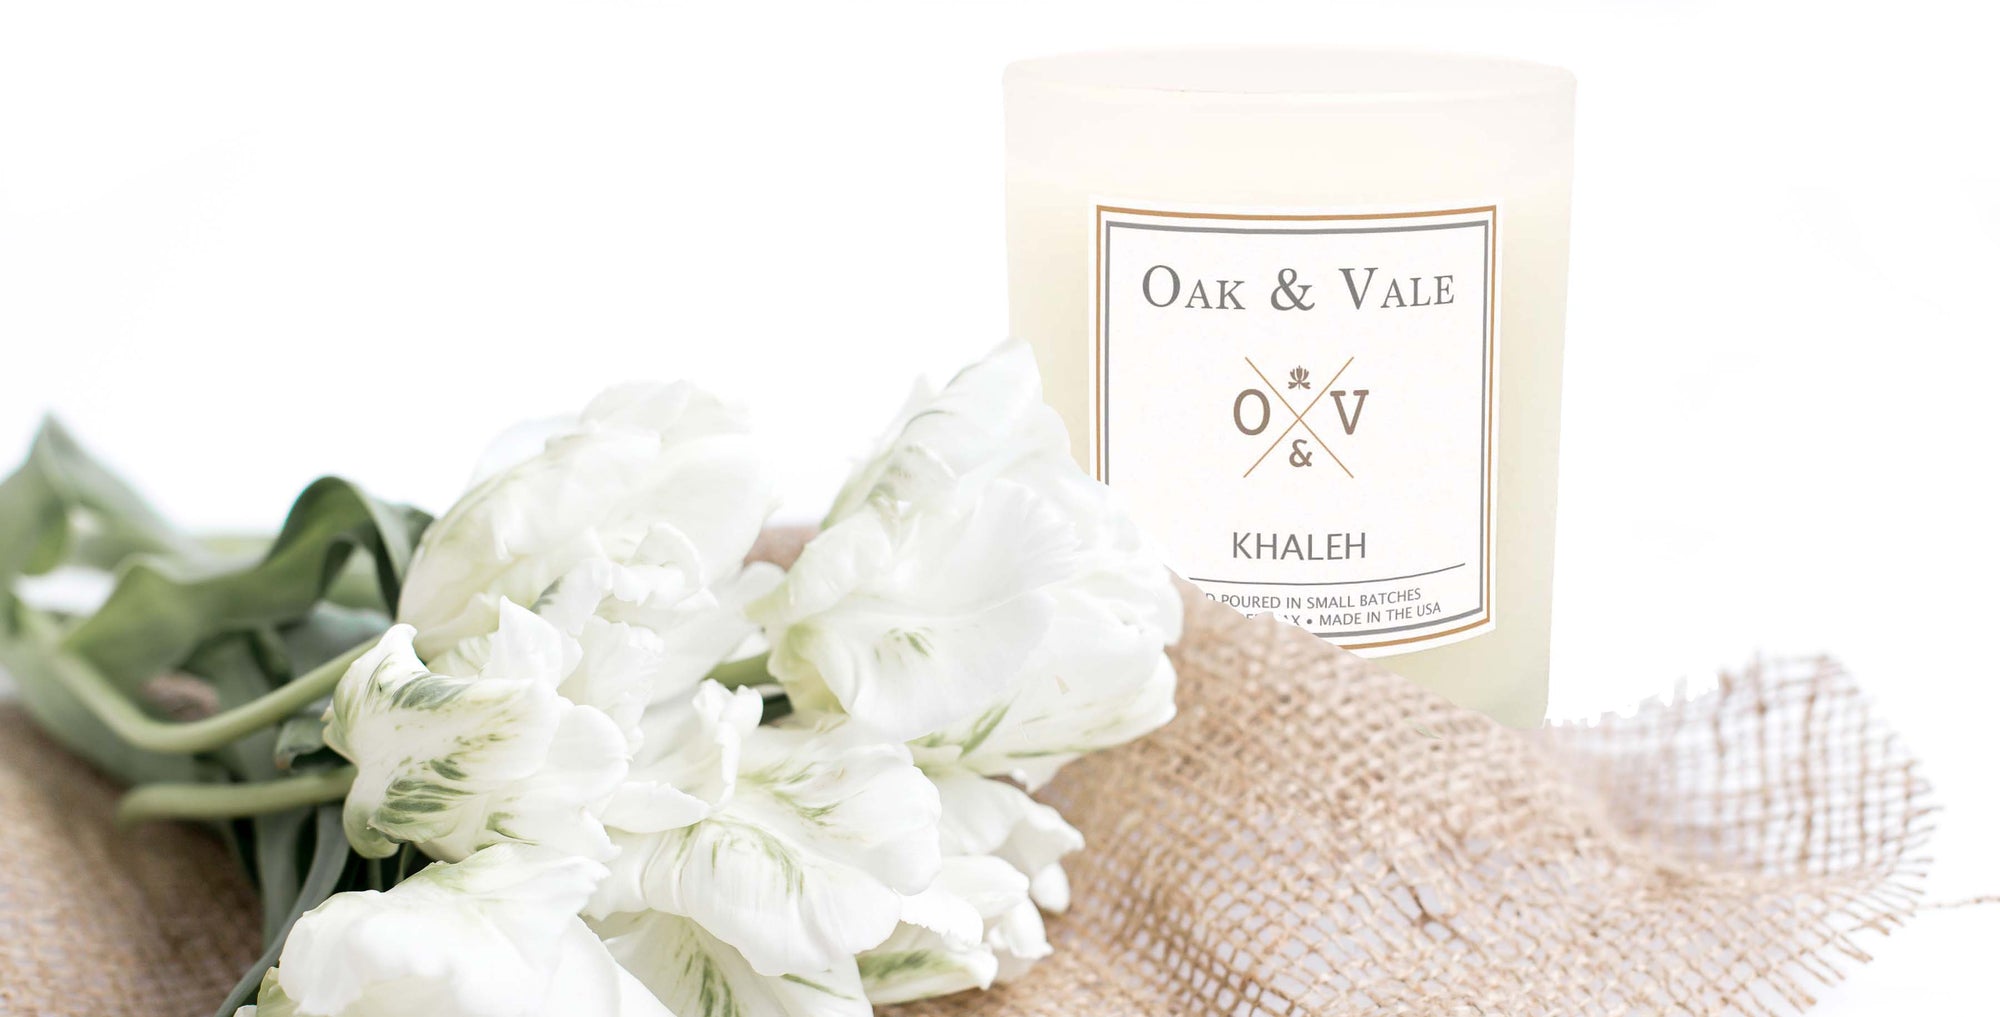 Oak & Vale Khaleh Large Candle with Double Cotton Wicks